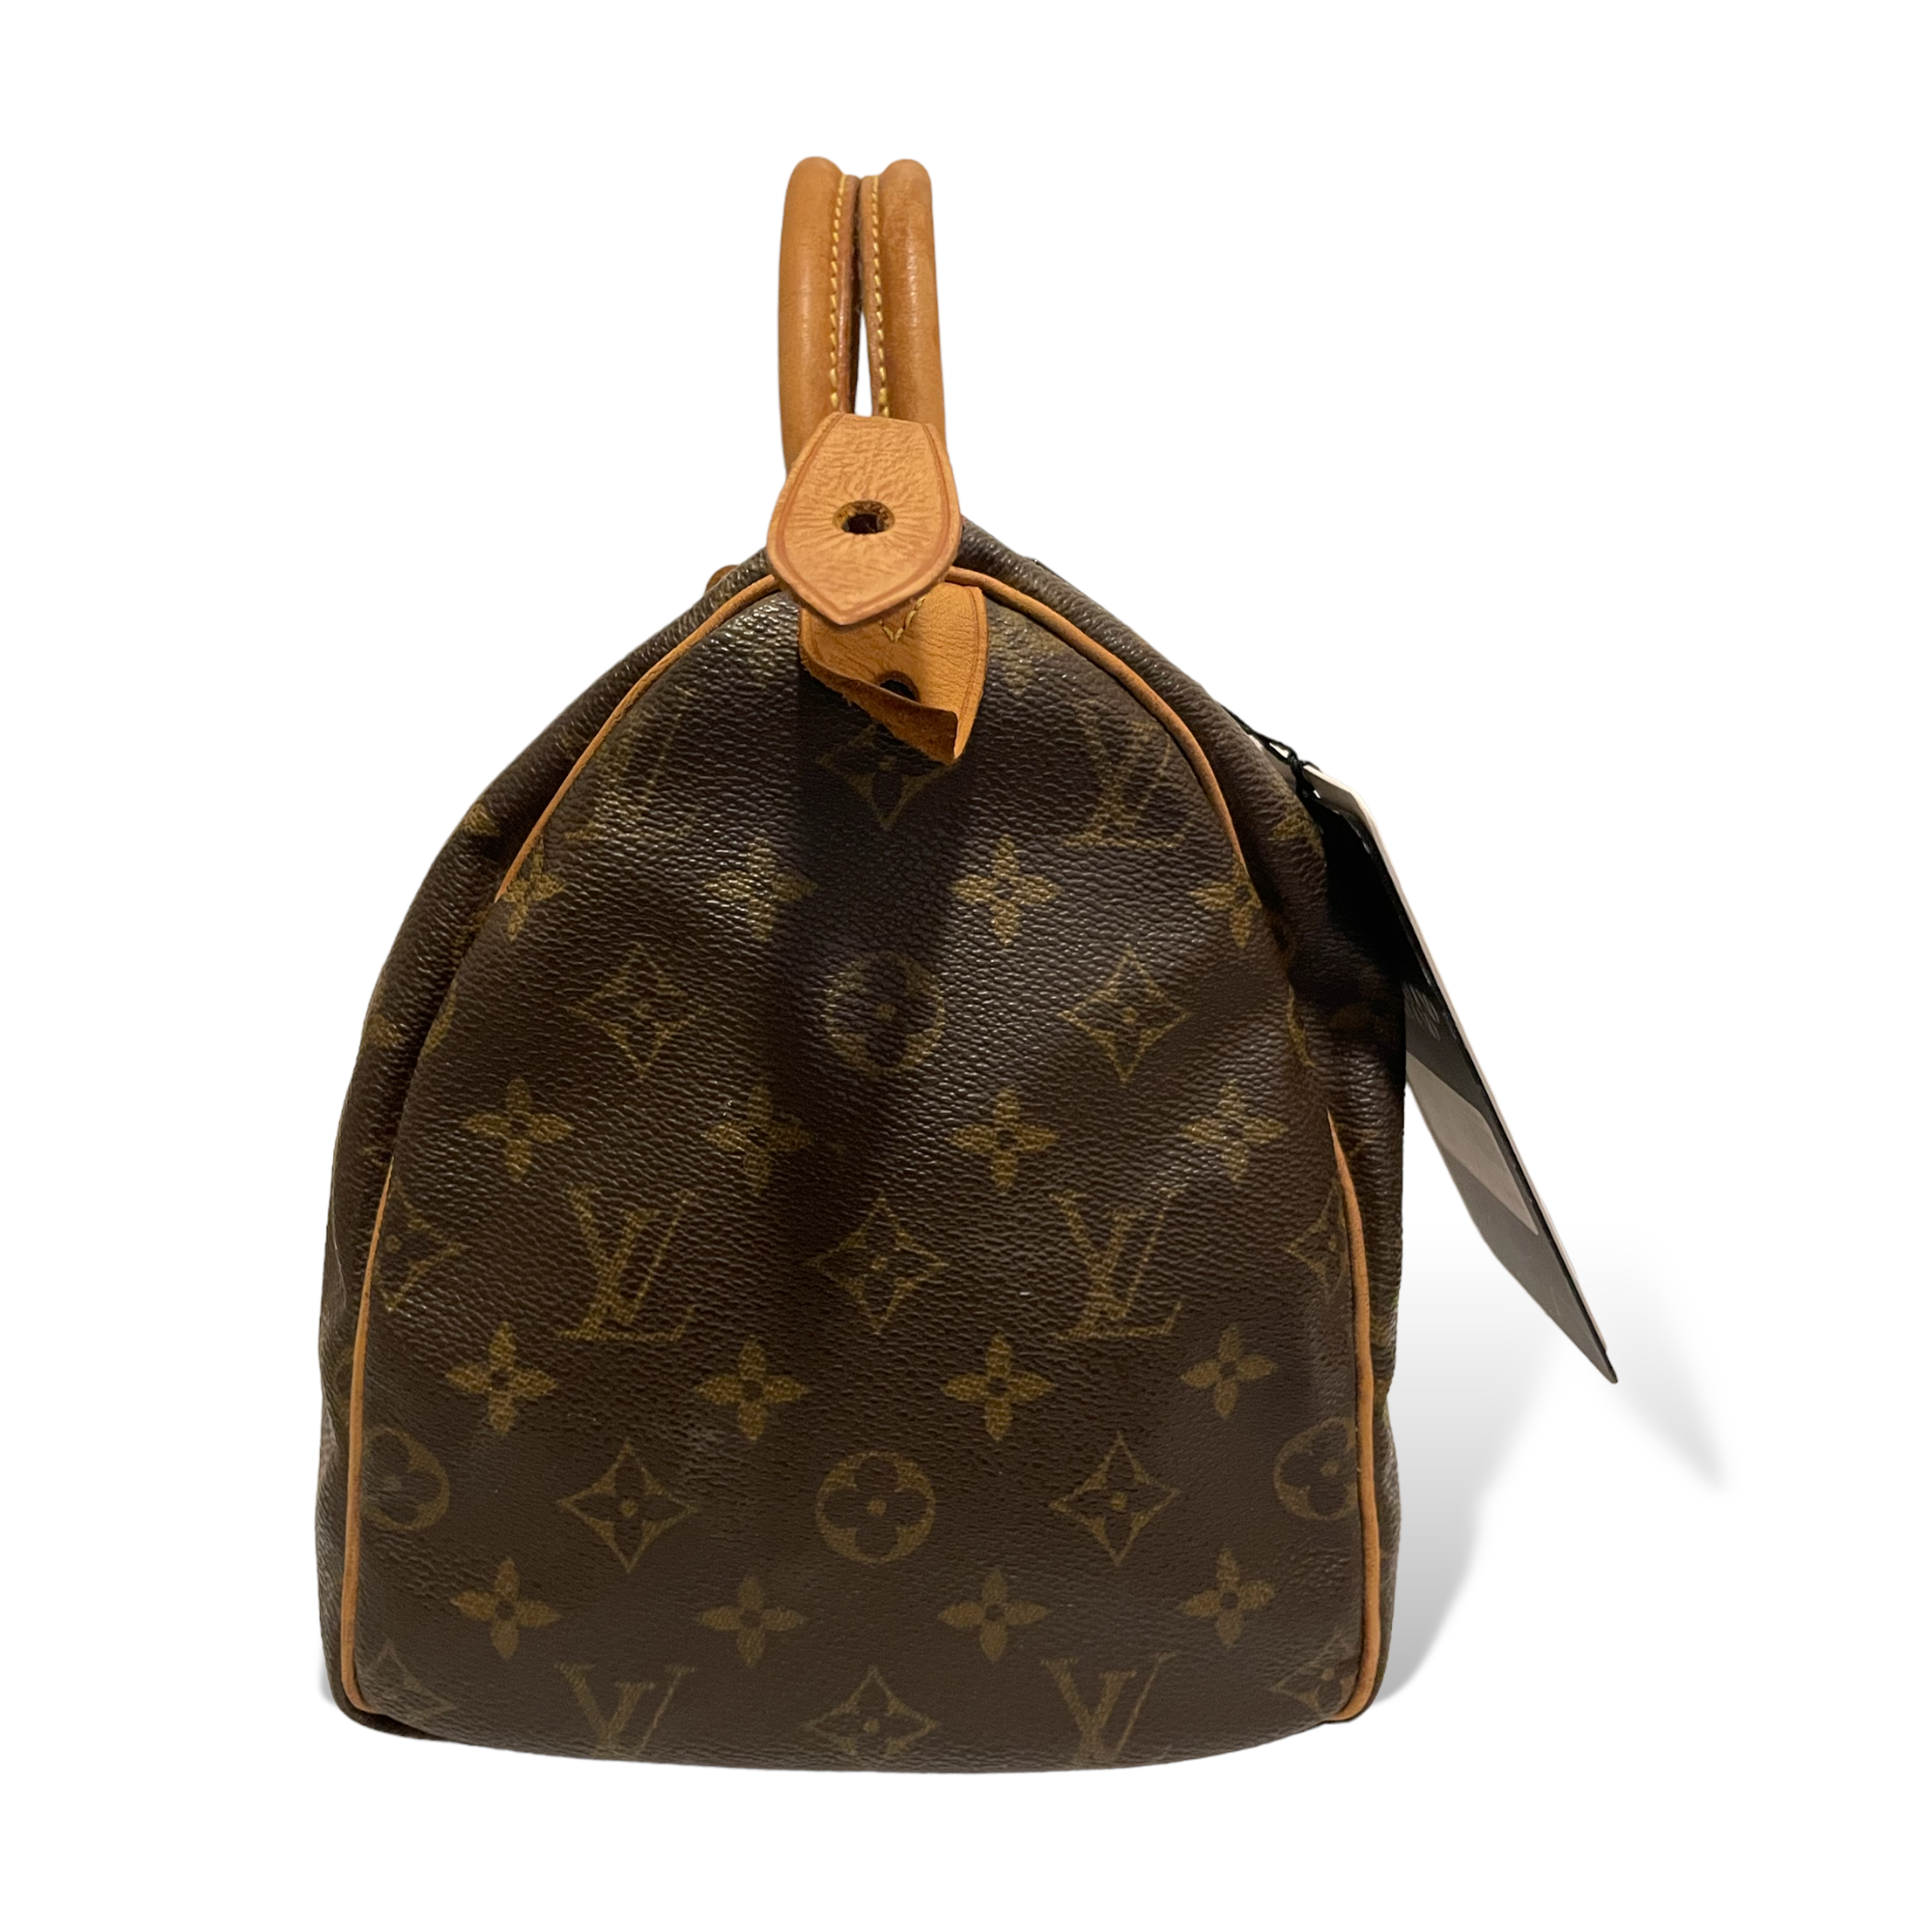 Louis Vuitton Vintage Speedy 30 handbag in iconic Monogram coated canvas with Vachetta leather trim